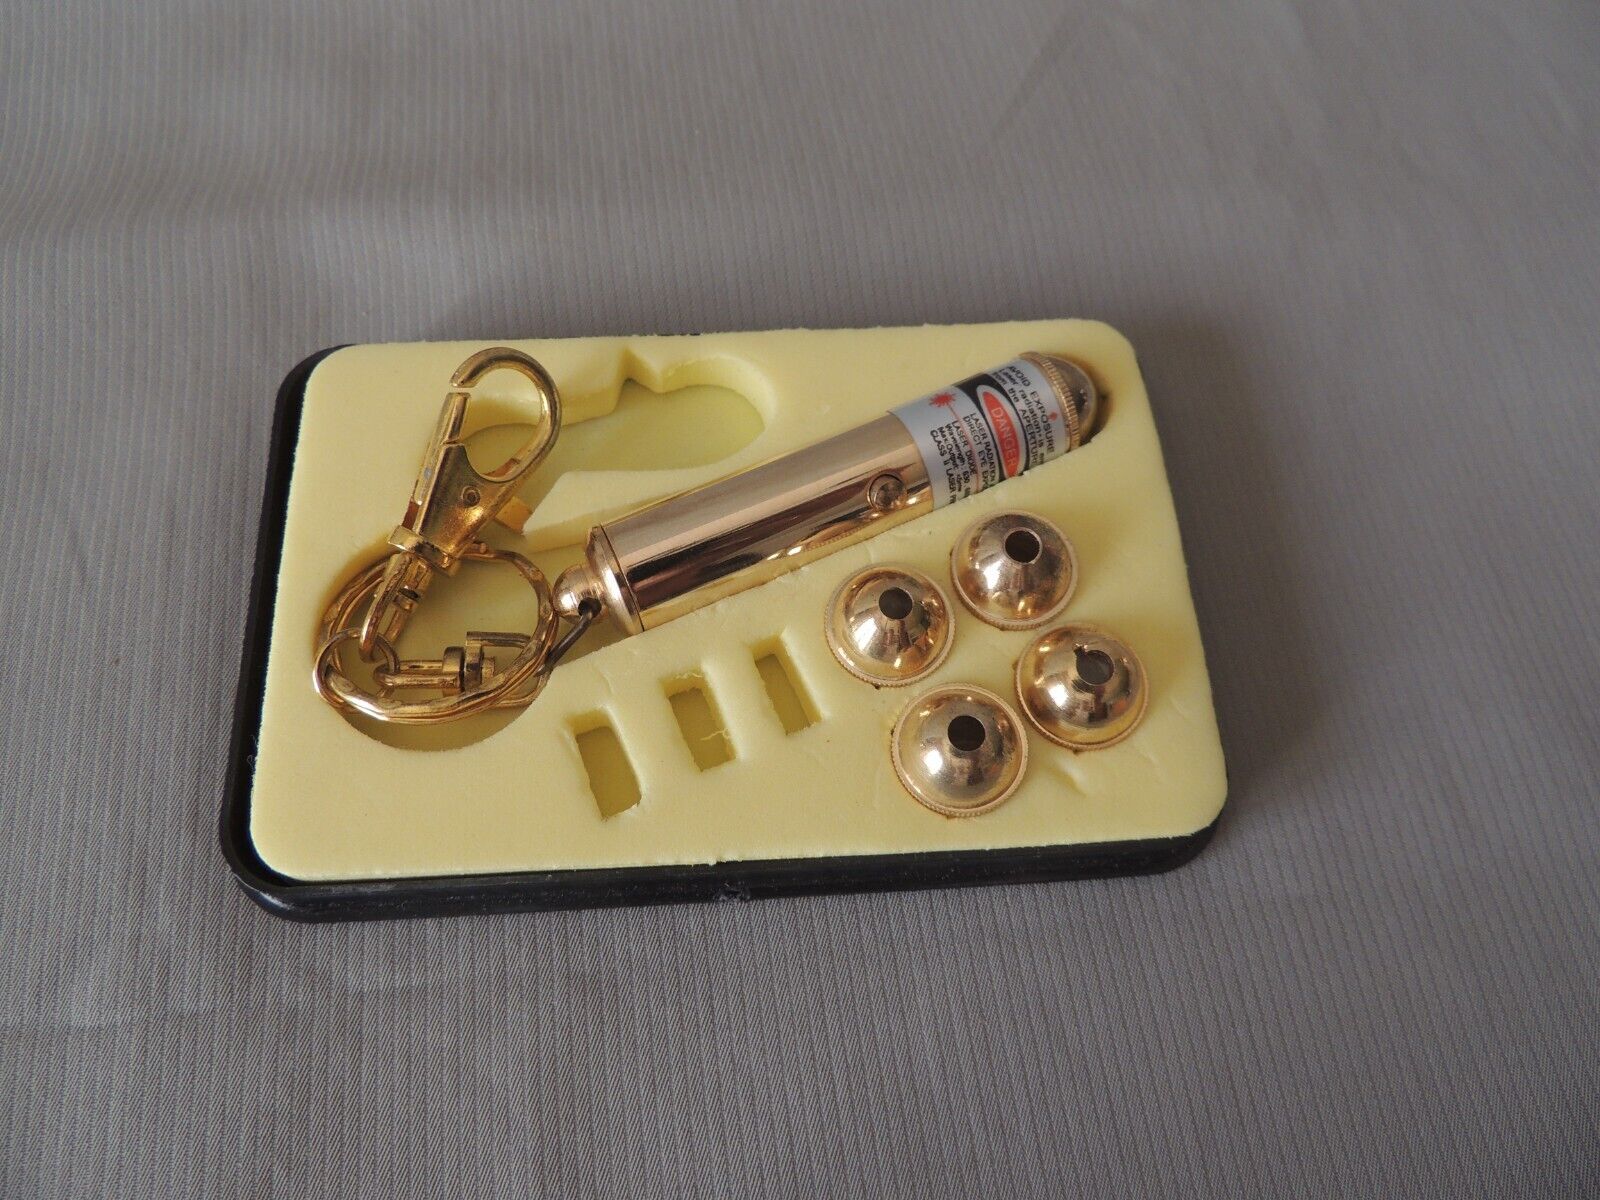 Bronze laser keychain 4 different sized heads maxell alkaline battery